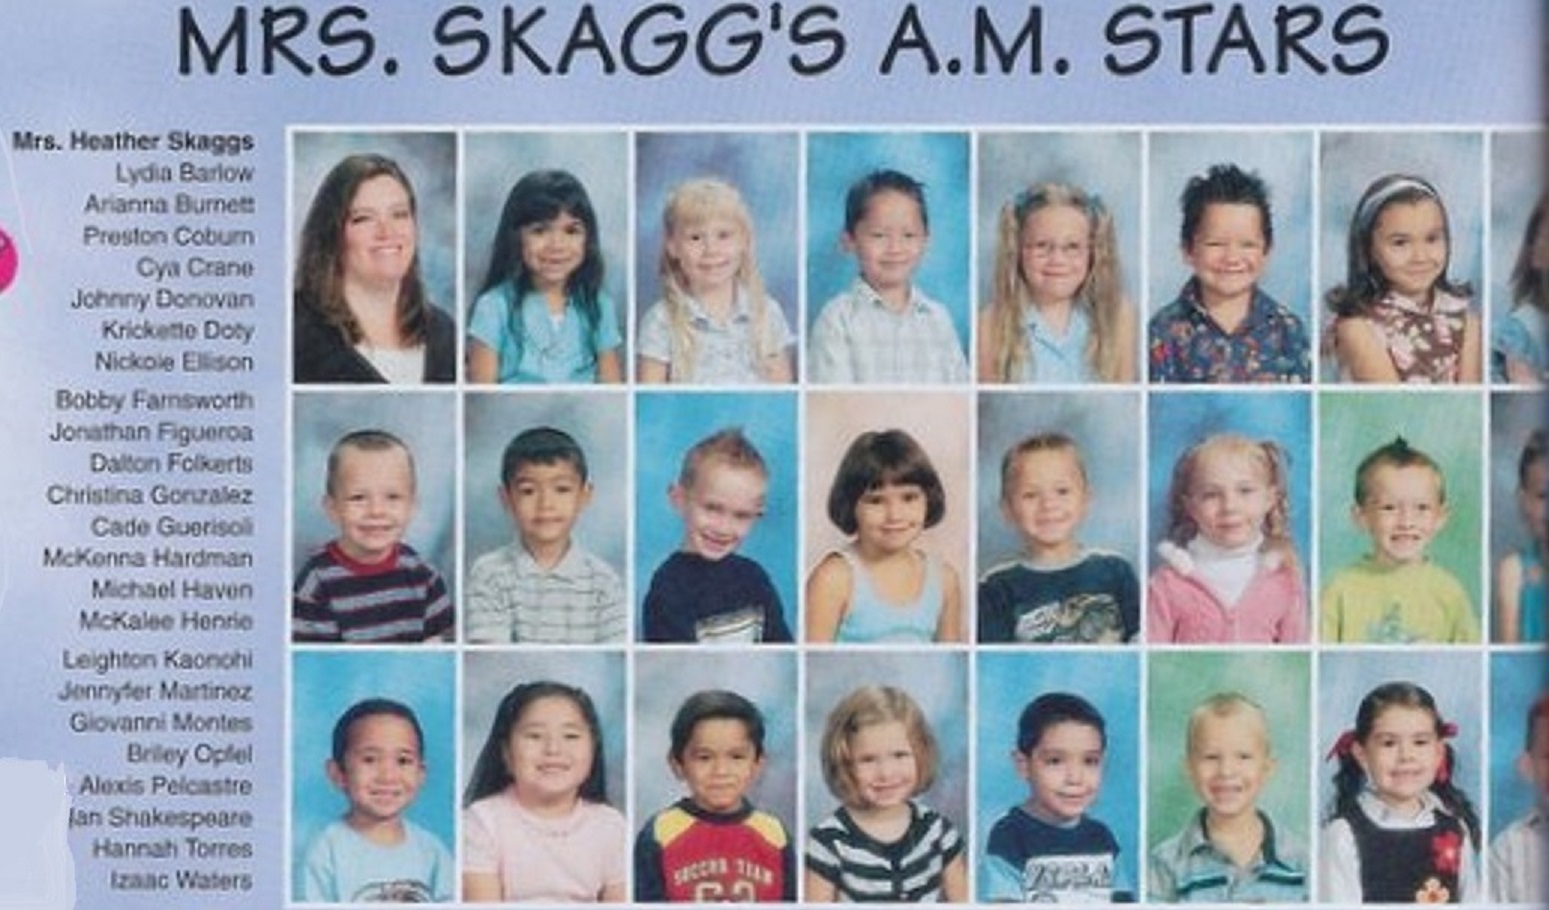 Mrs. Heather Skaggs' 2006-2007 AM kindergarten class at East Elementary School